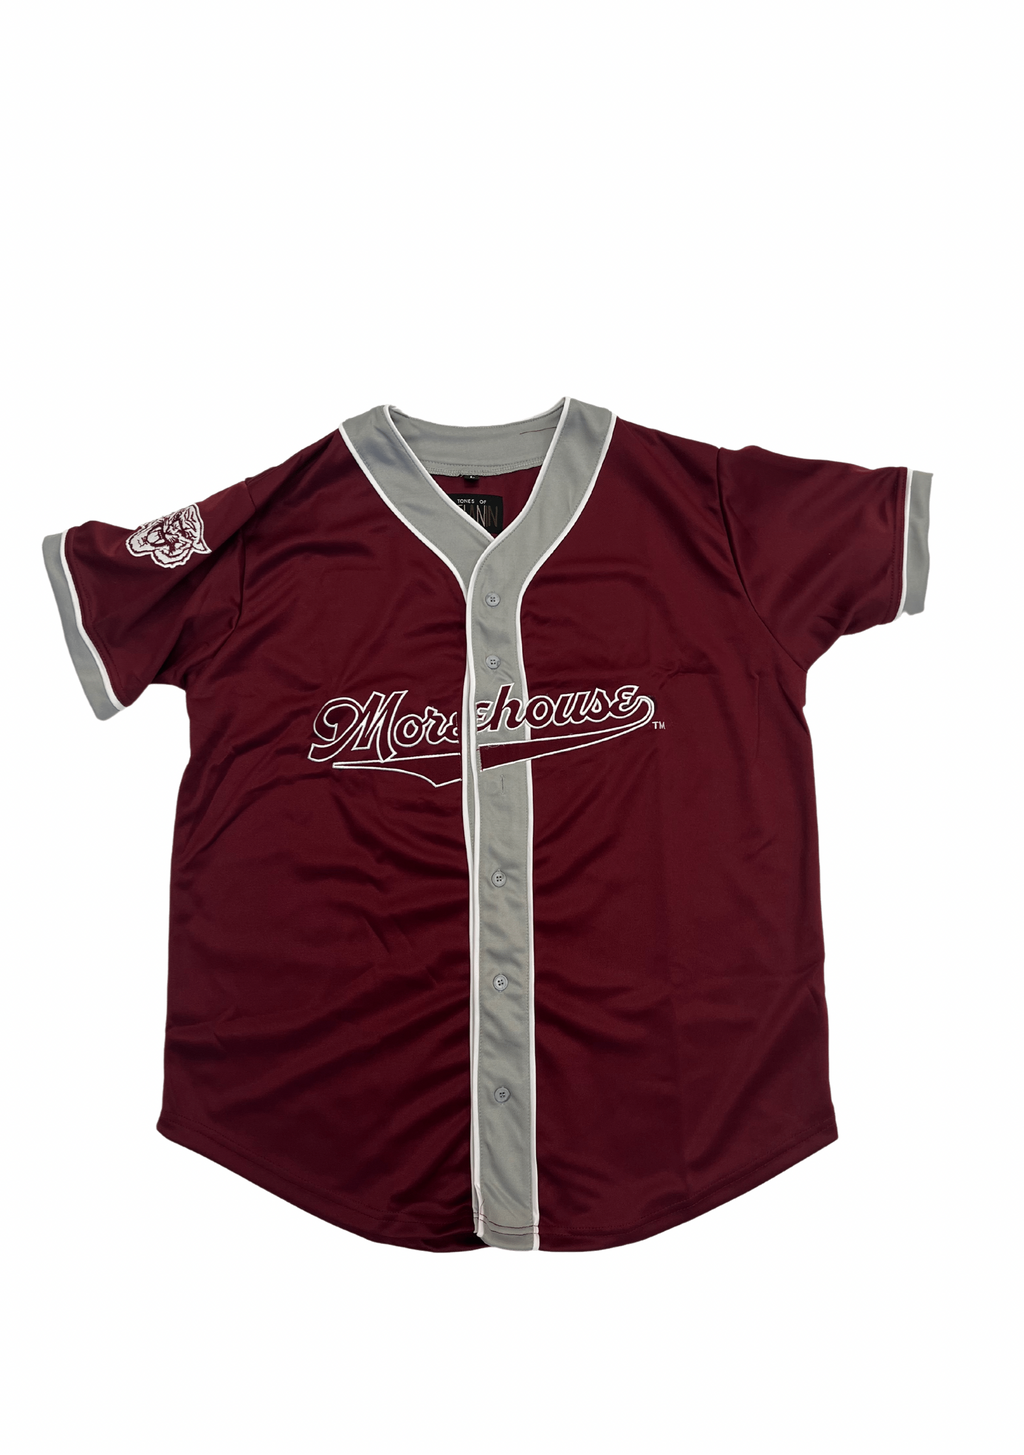 Baseball Jerseys for sale in Lincoln, Nebraska